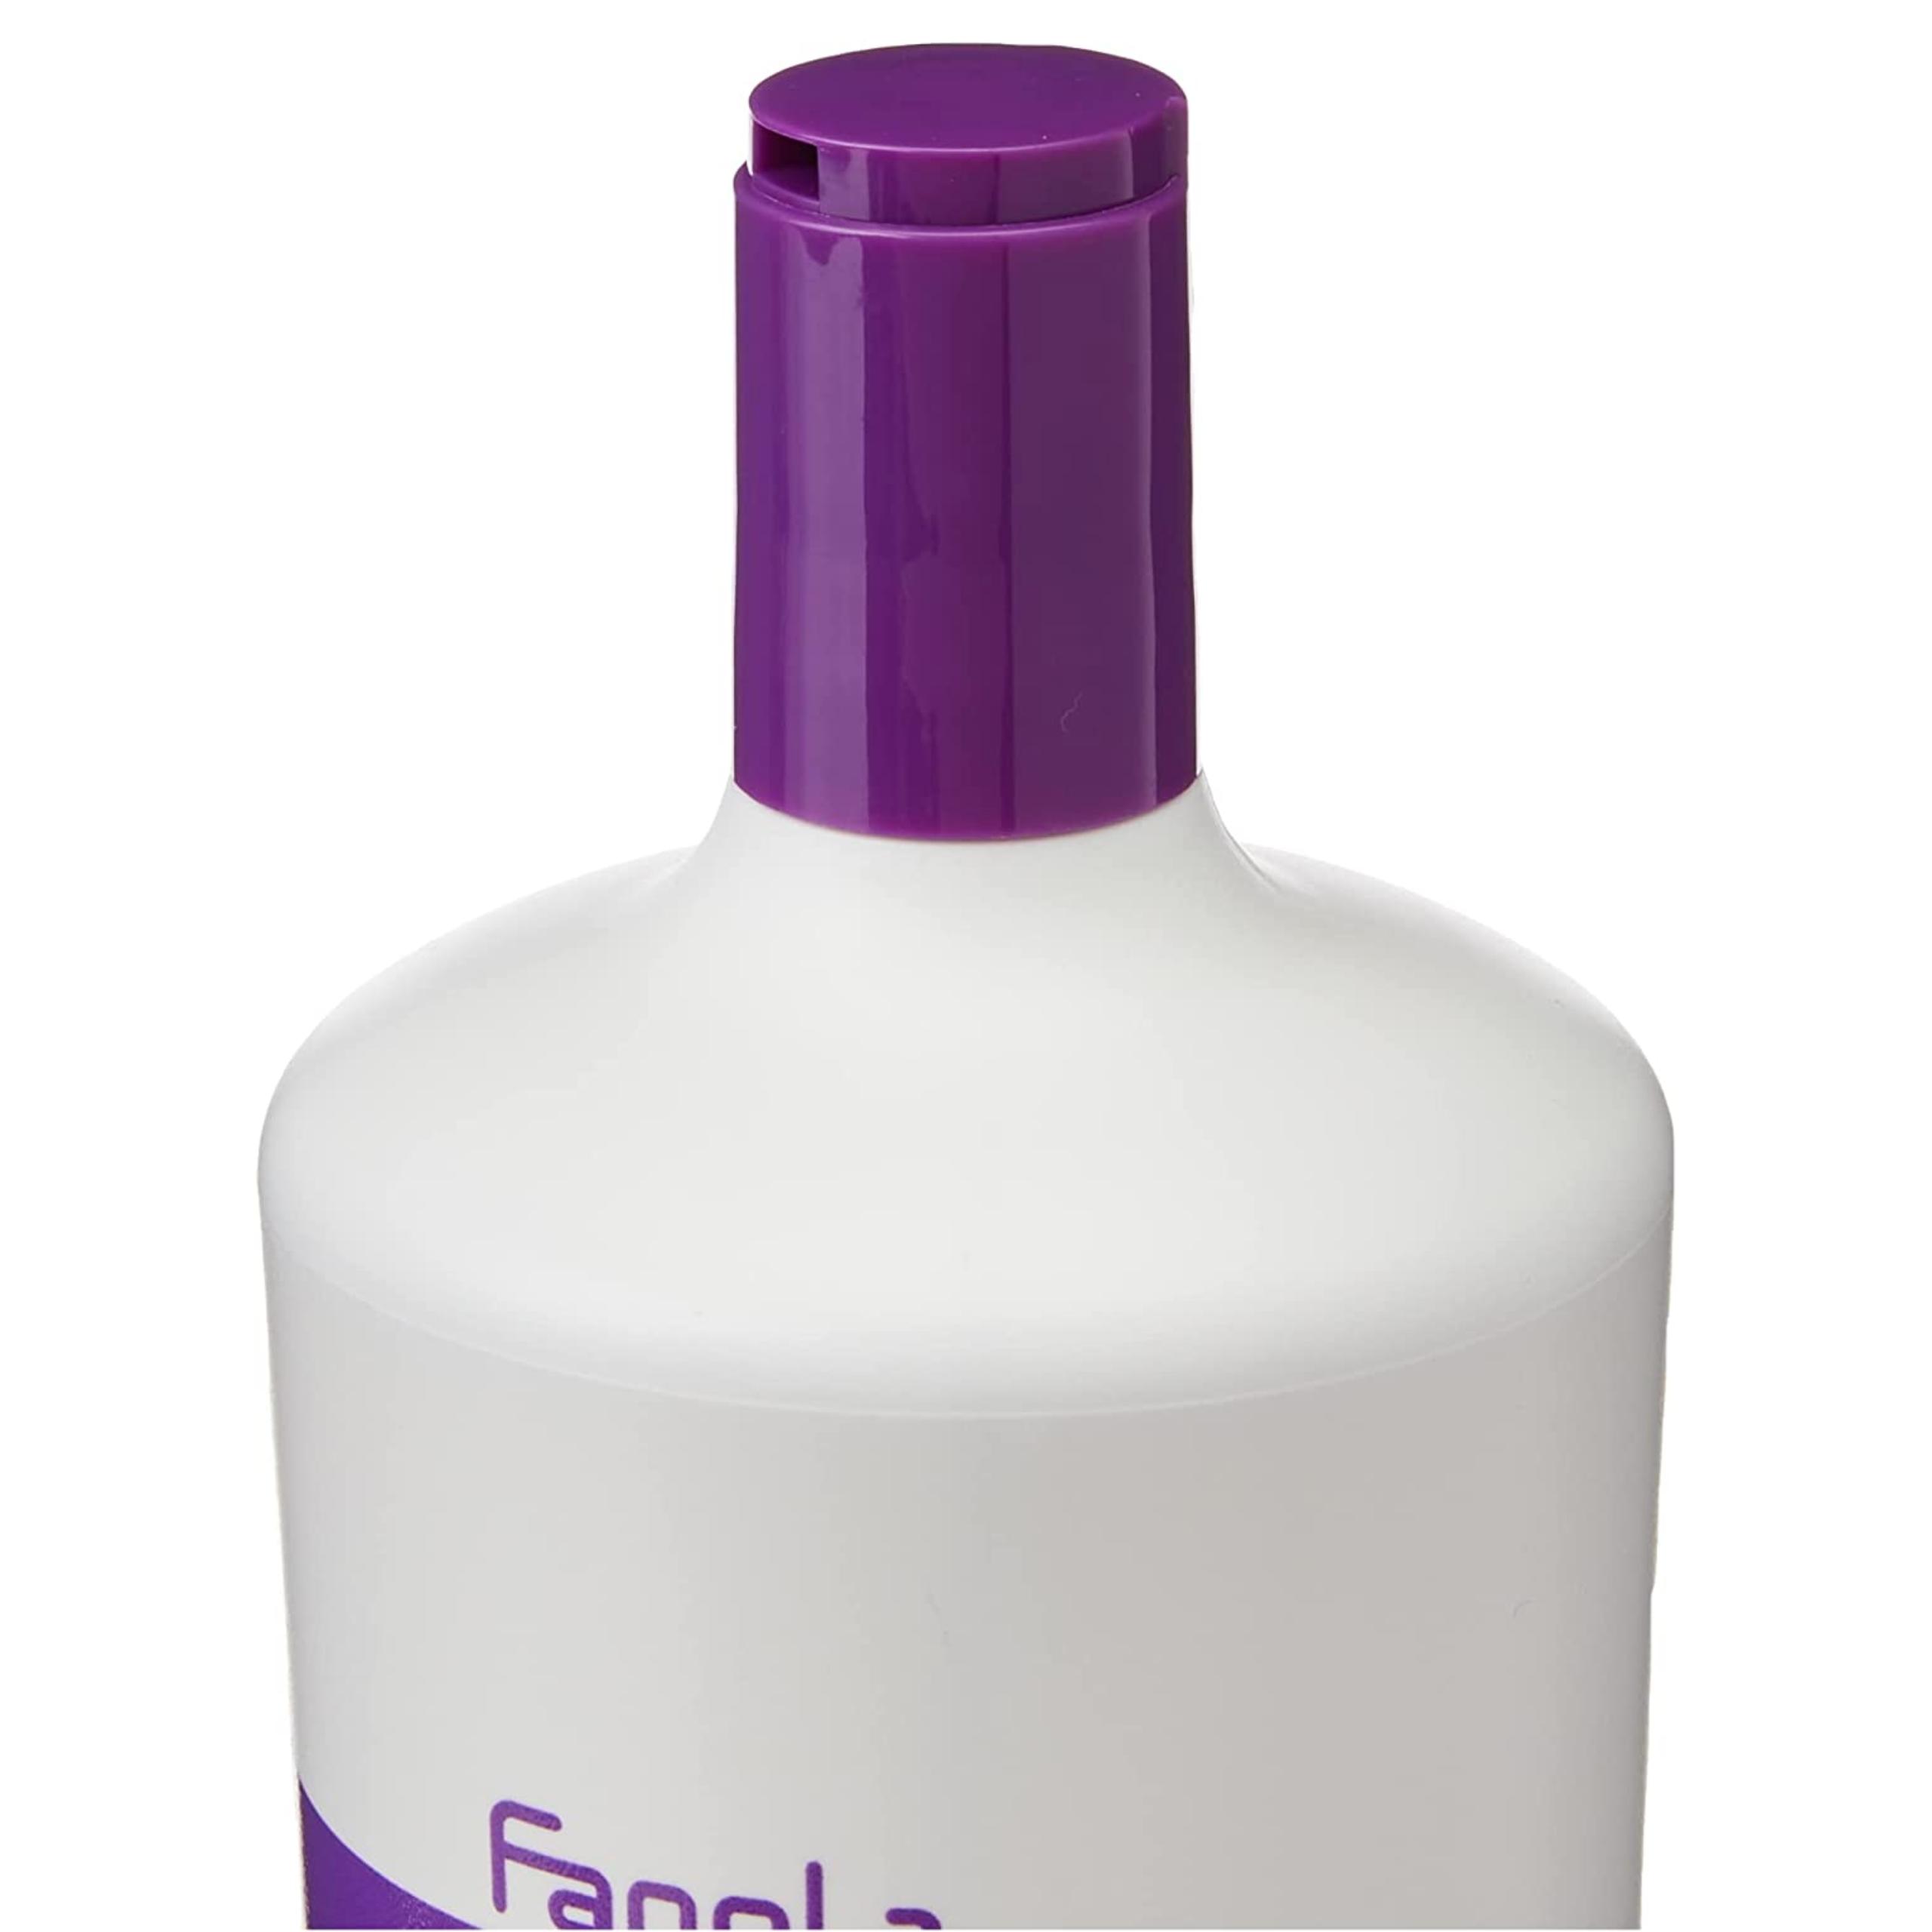 Fanola No Yellow Shampoo, 1L purple shampoo for blonde hair